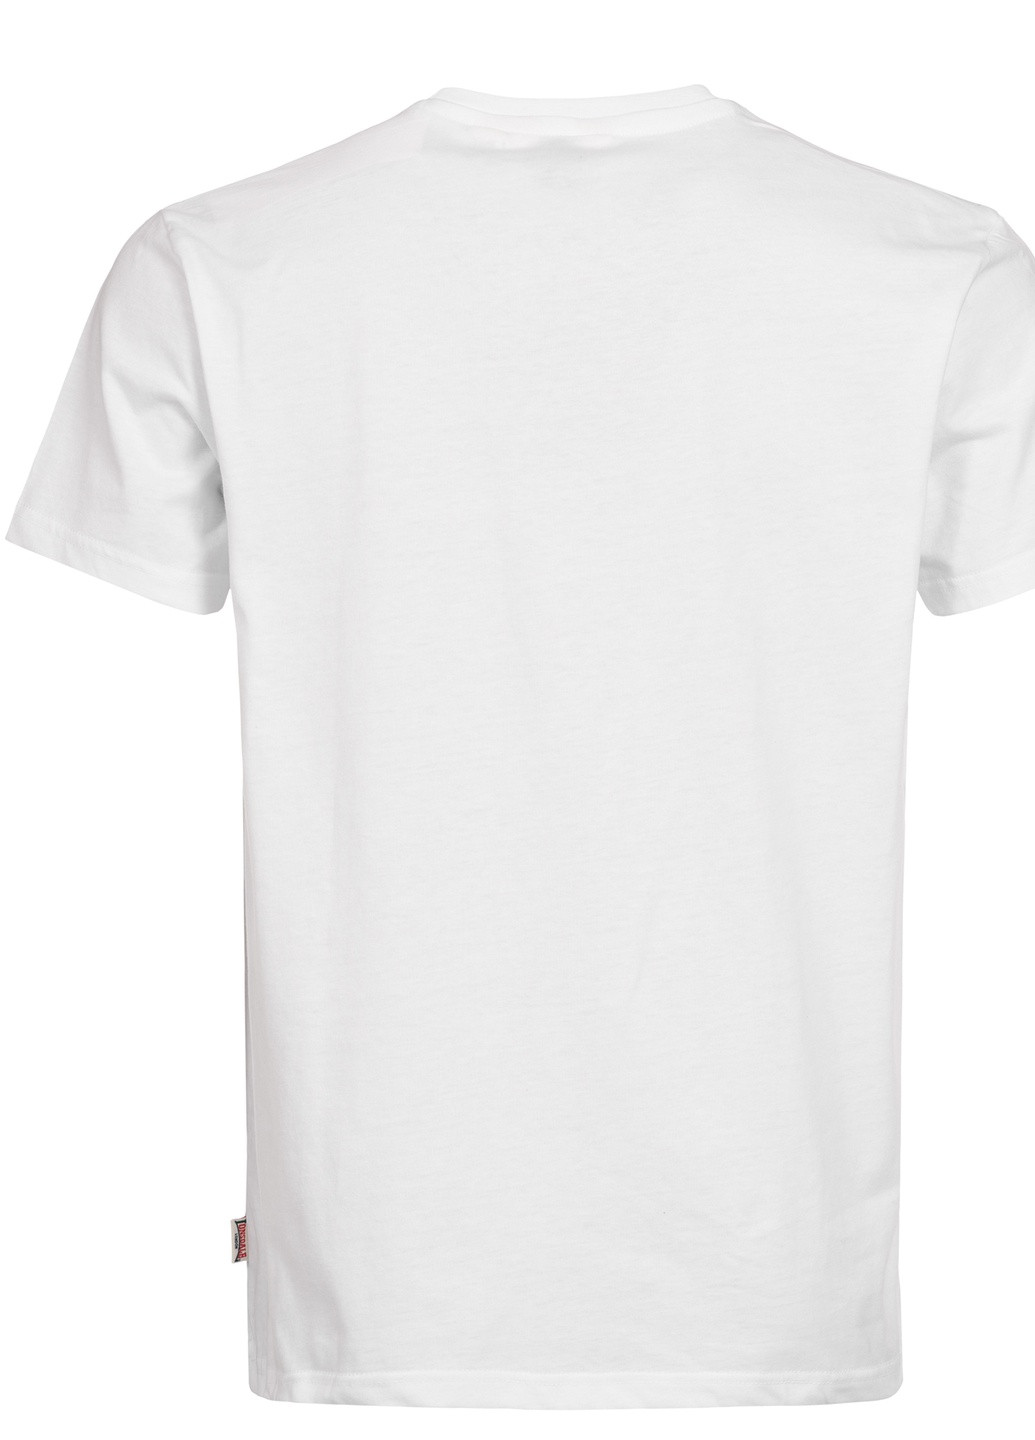 Черно-белая комплект 2 футболки Lonsdale DILDAWN Double Pack